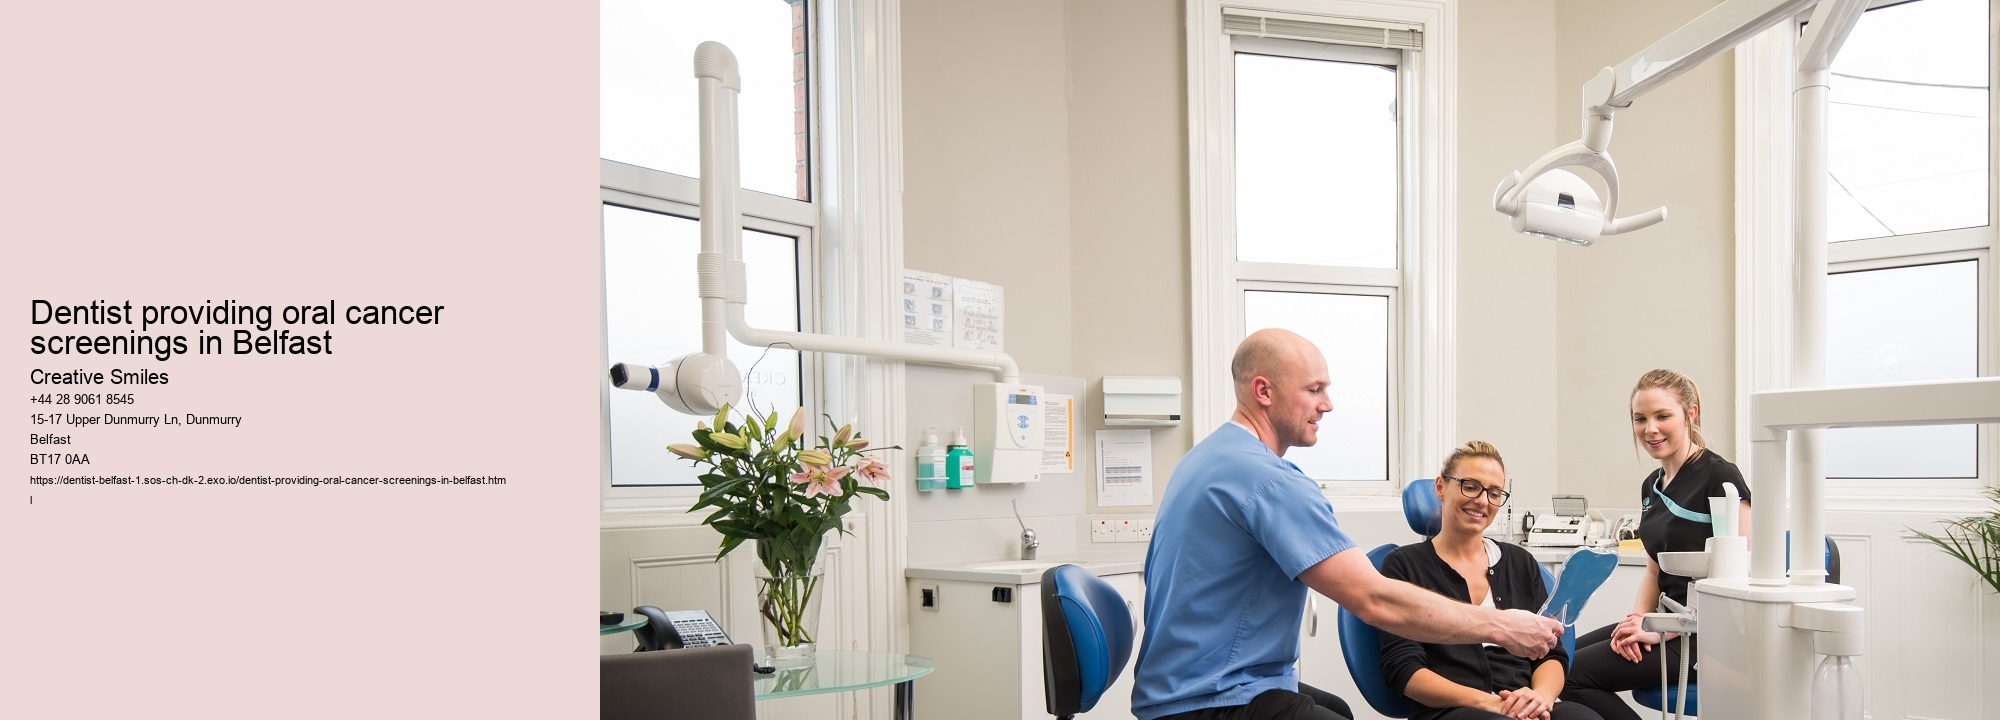 Dentist providing oral cancer screenings in Belfast